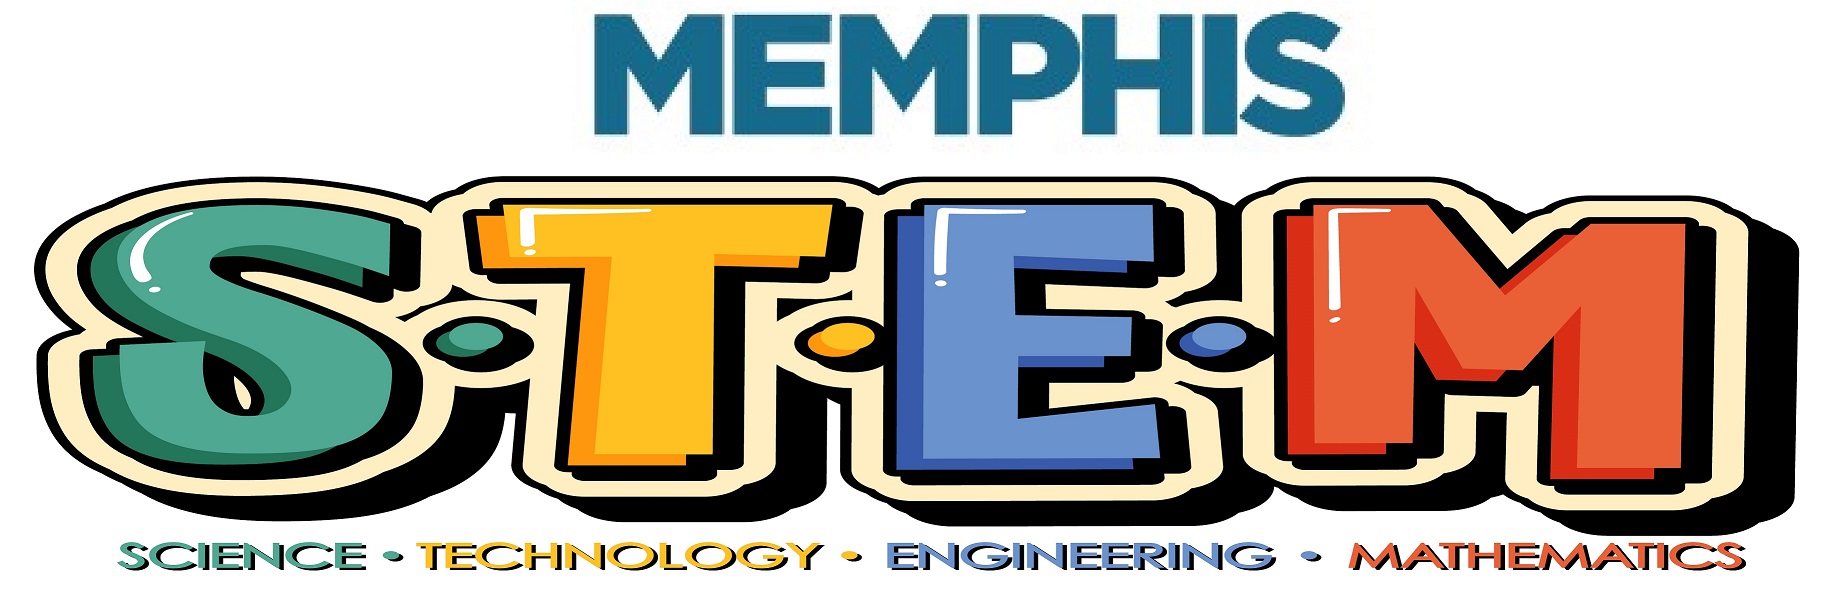 Memphis STEM